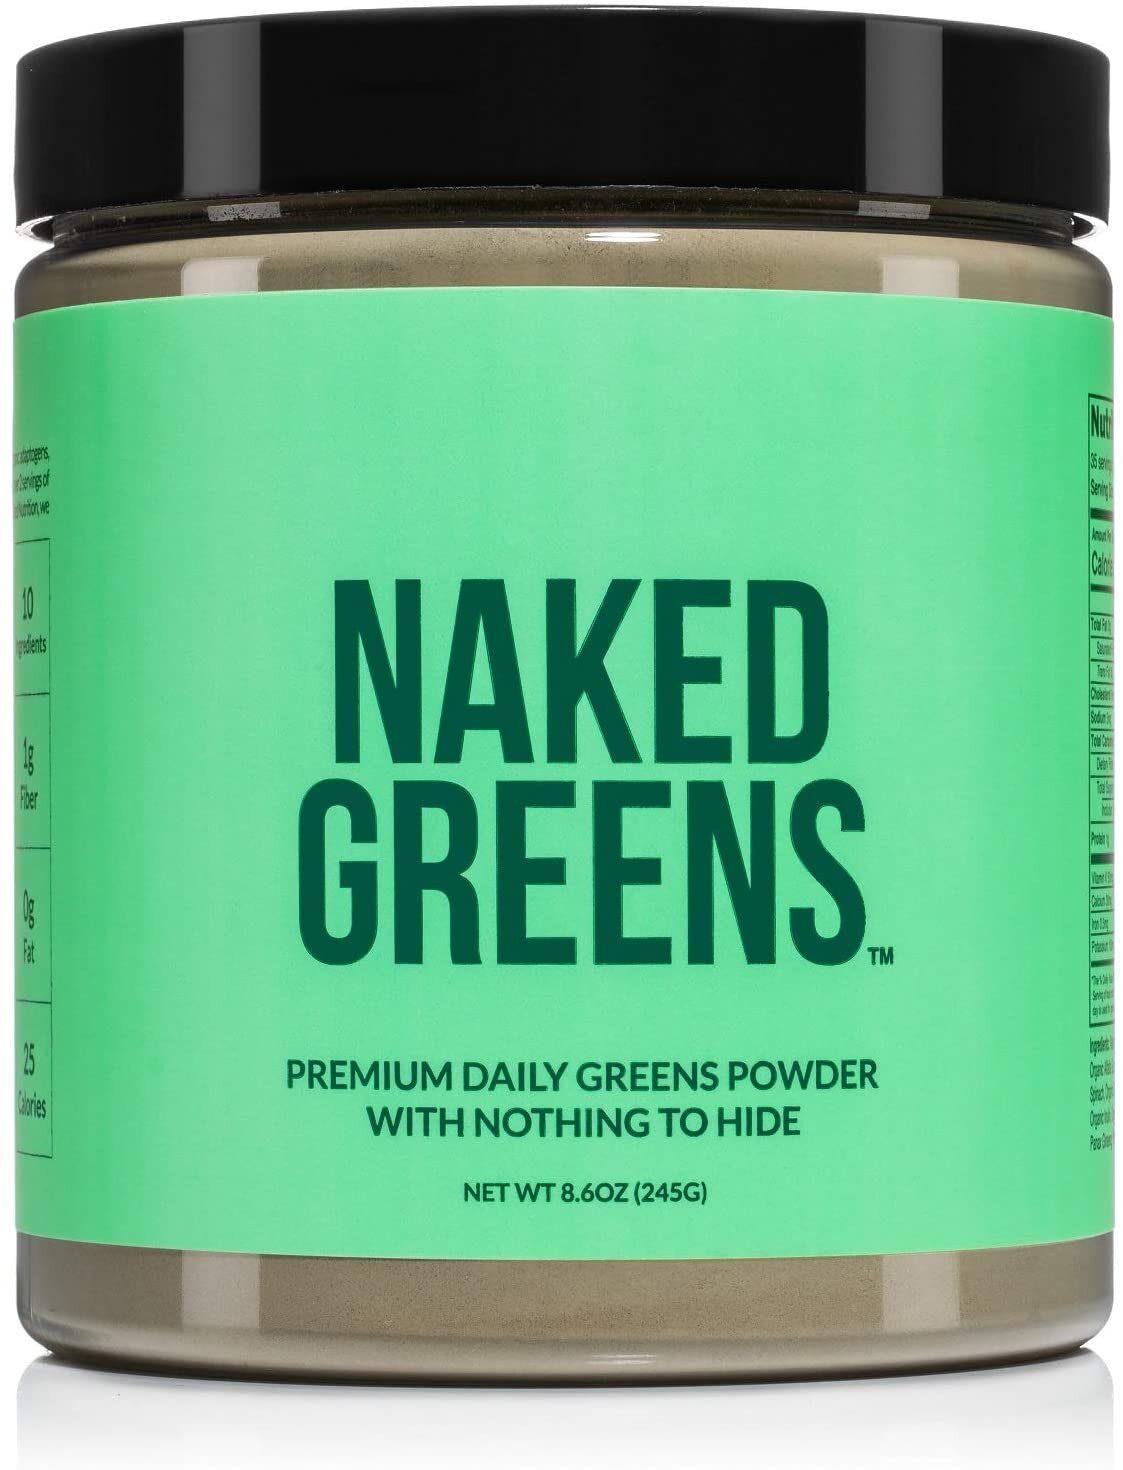 Naked-Greens-Product-Image.jpg